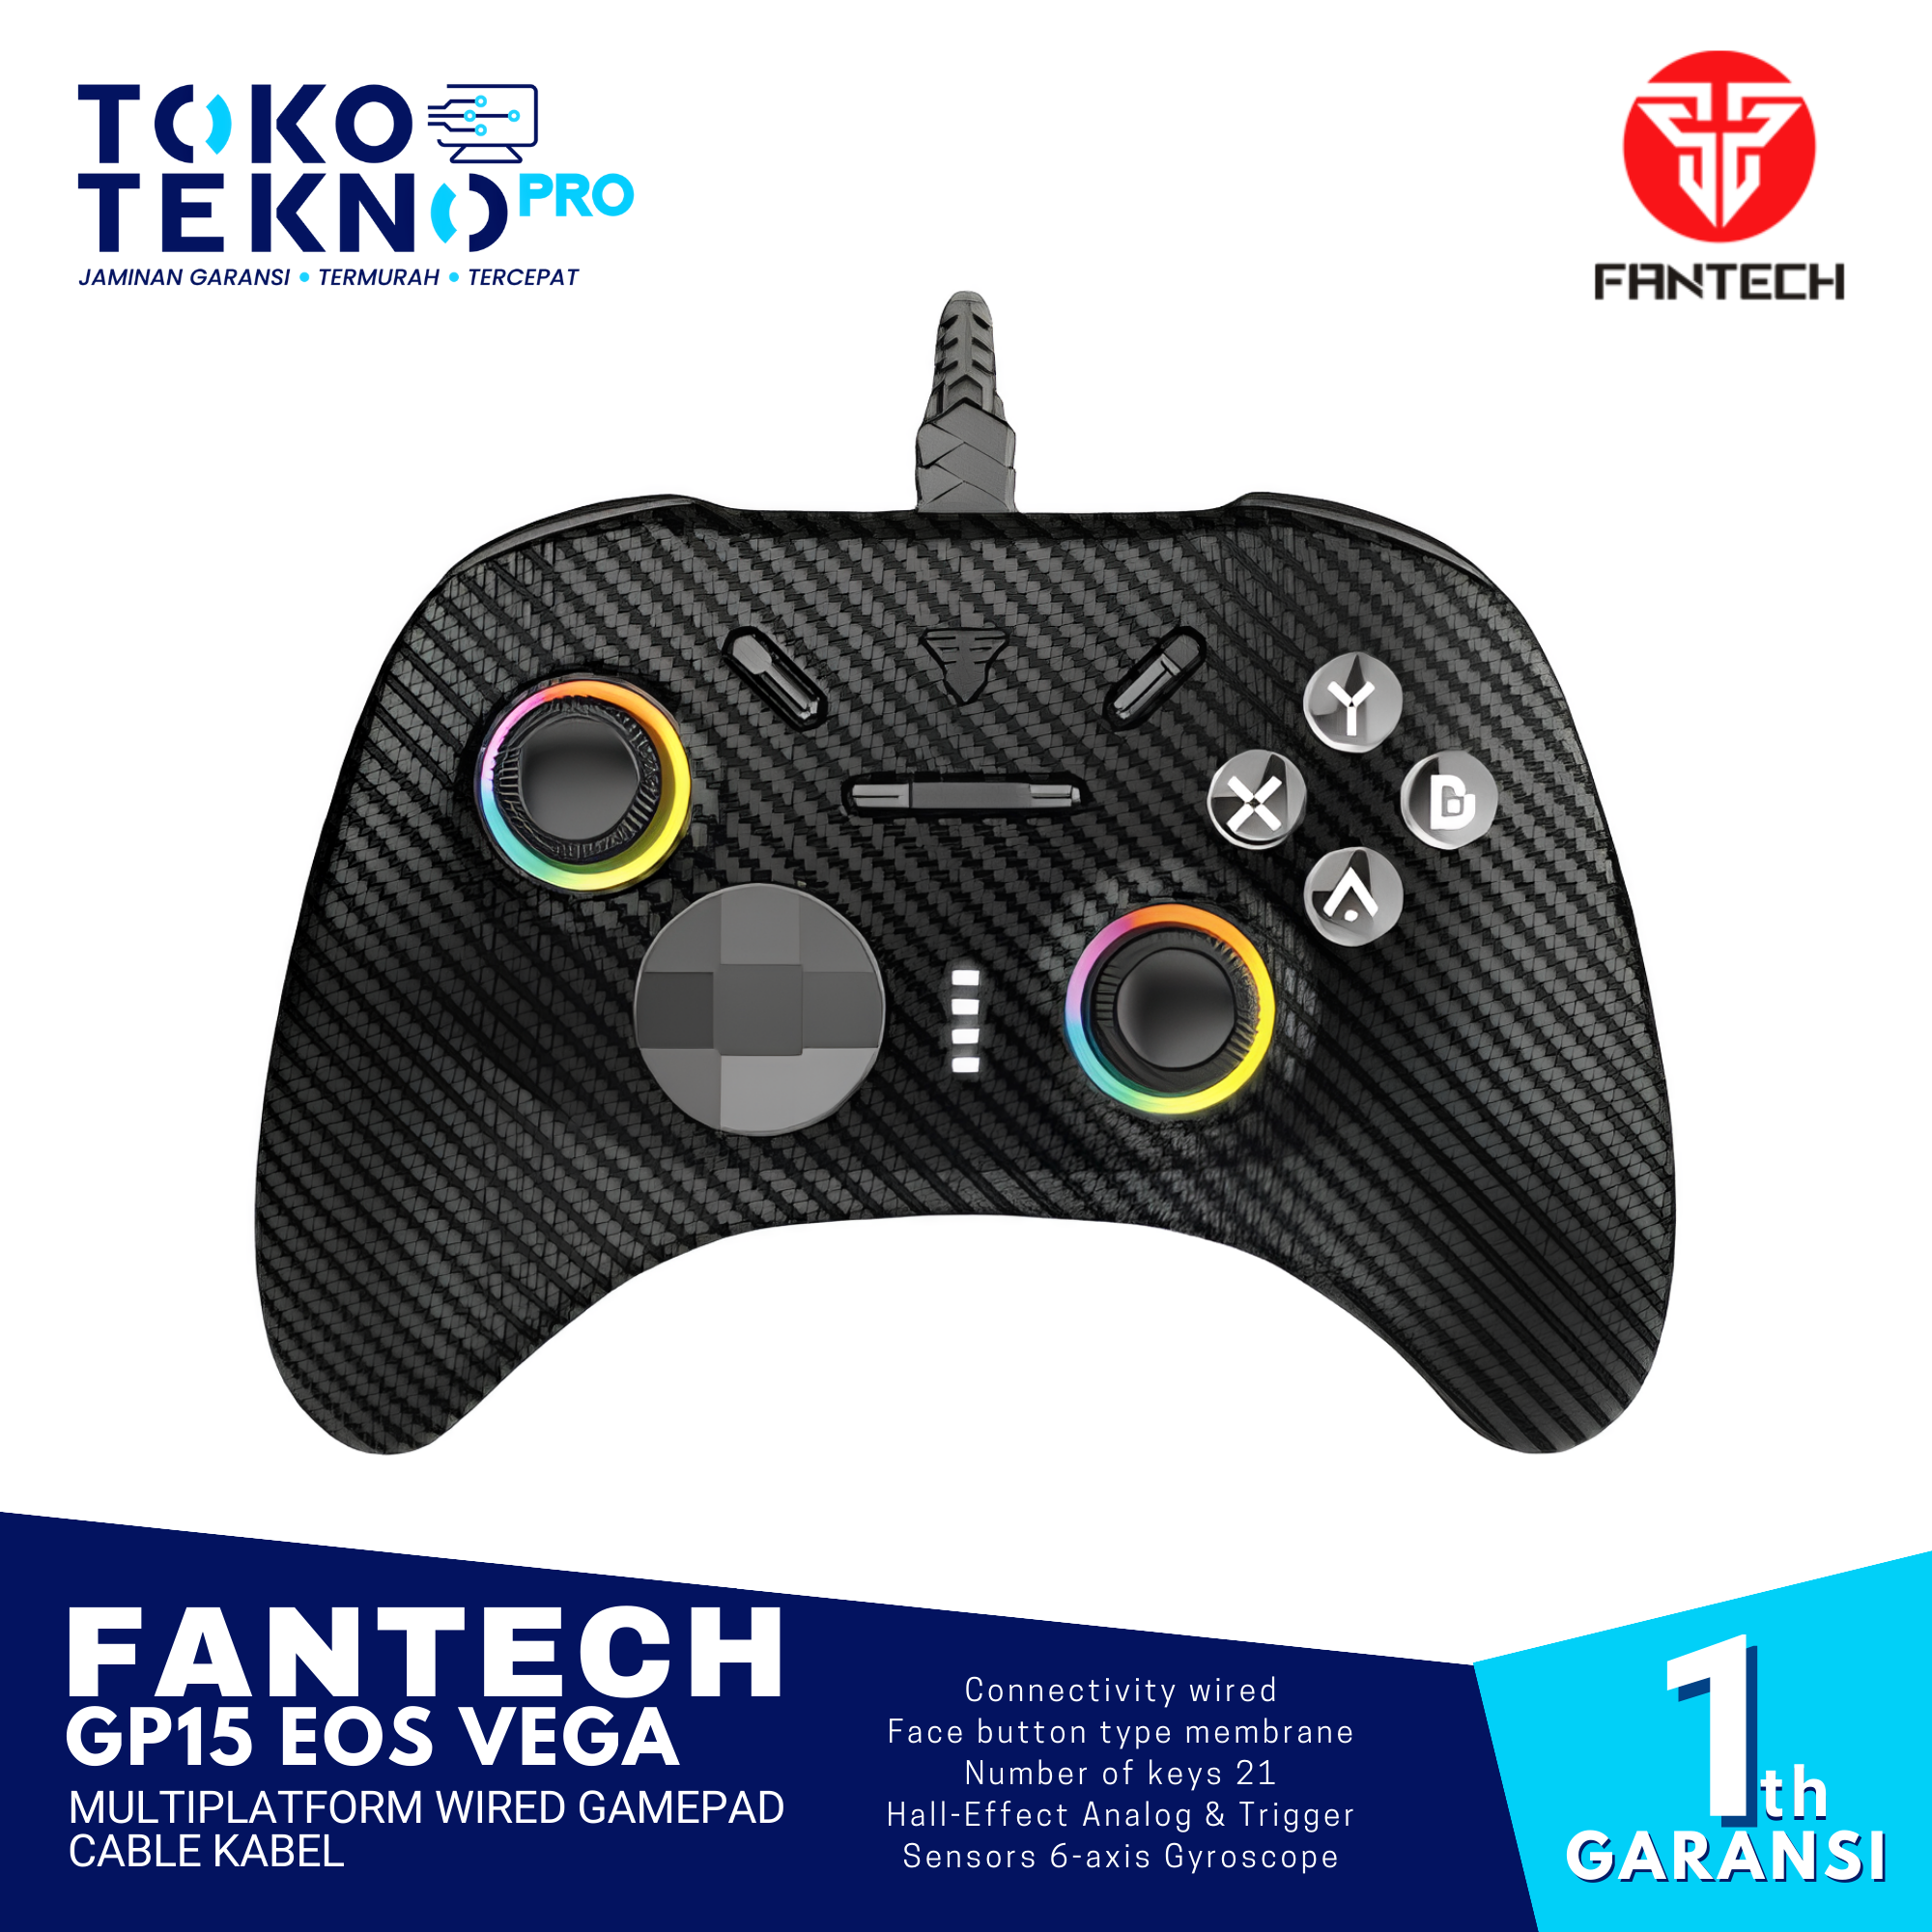 Fantech GP15 EOS VEGA Multiplatform Wired Gamepad Cable Kabe